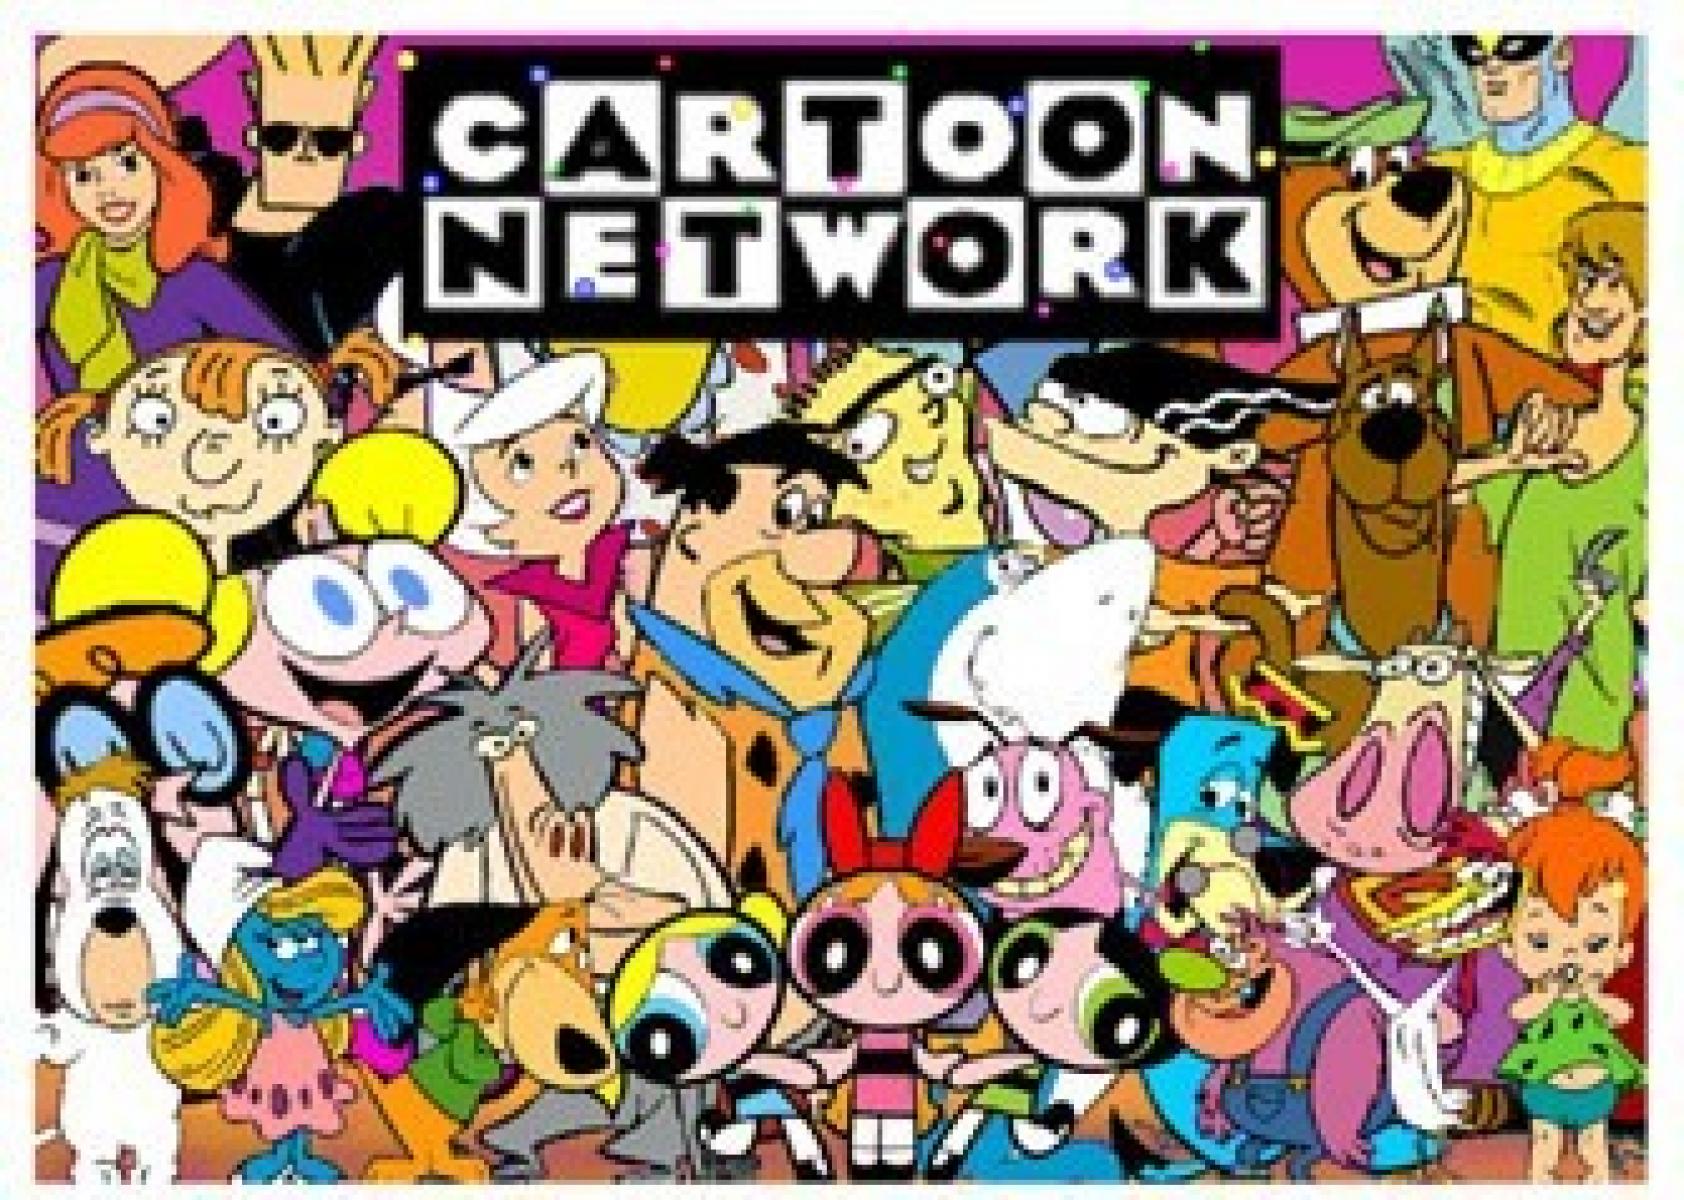    Cartoon Network   Yes